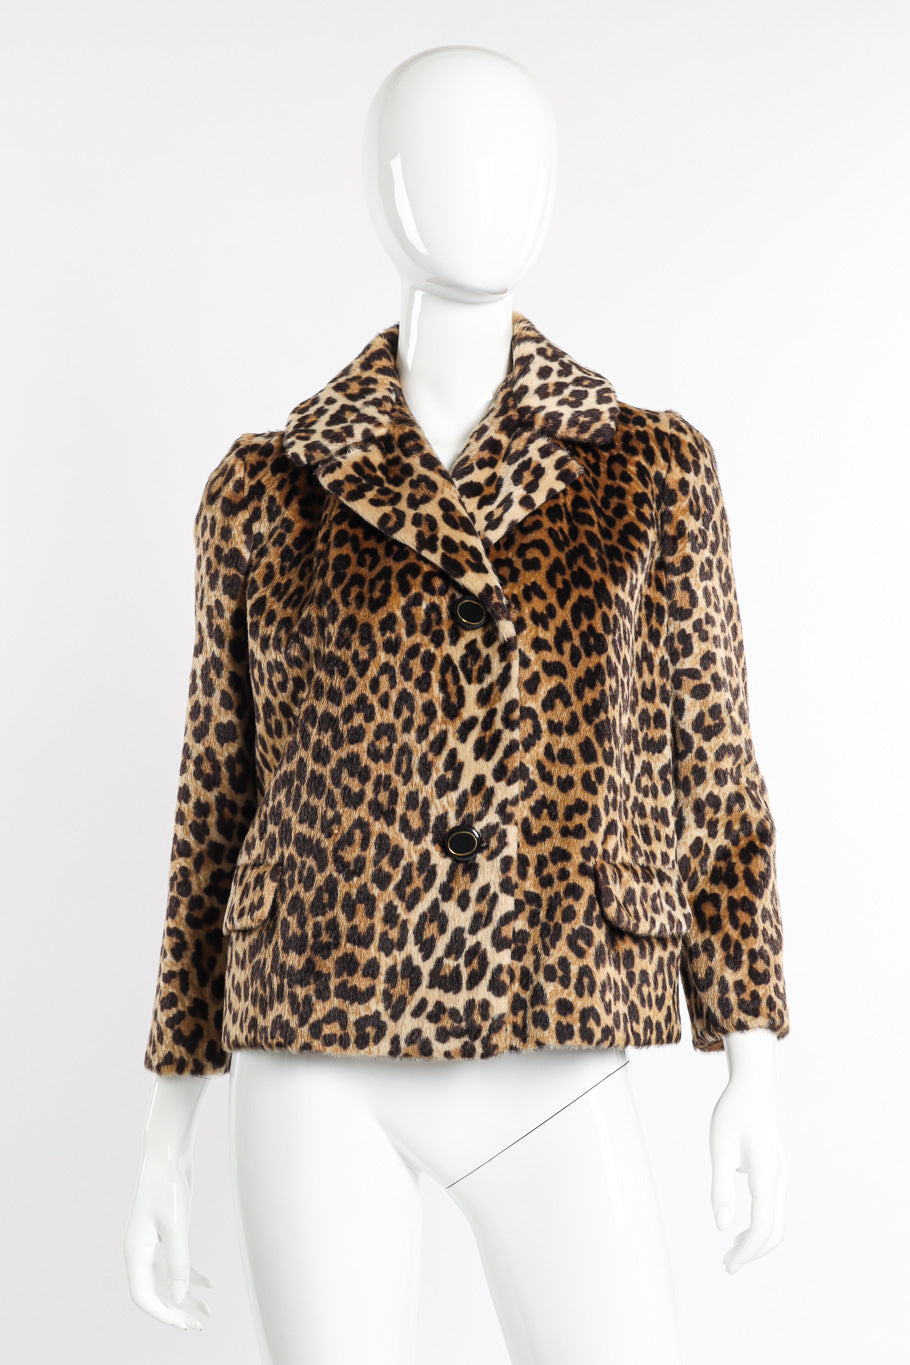 Vintage Marcus Leopard Print Jacket front view on mannequin @recessla